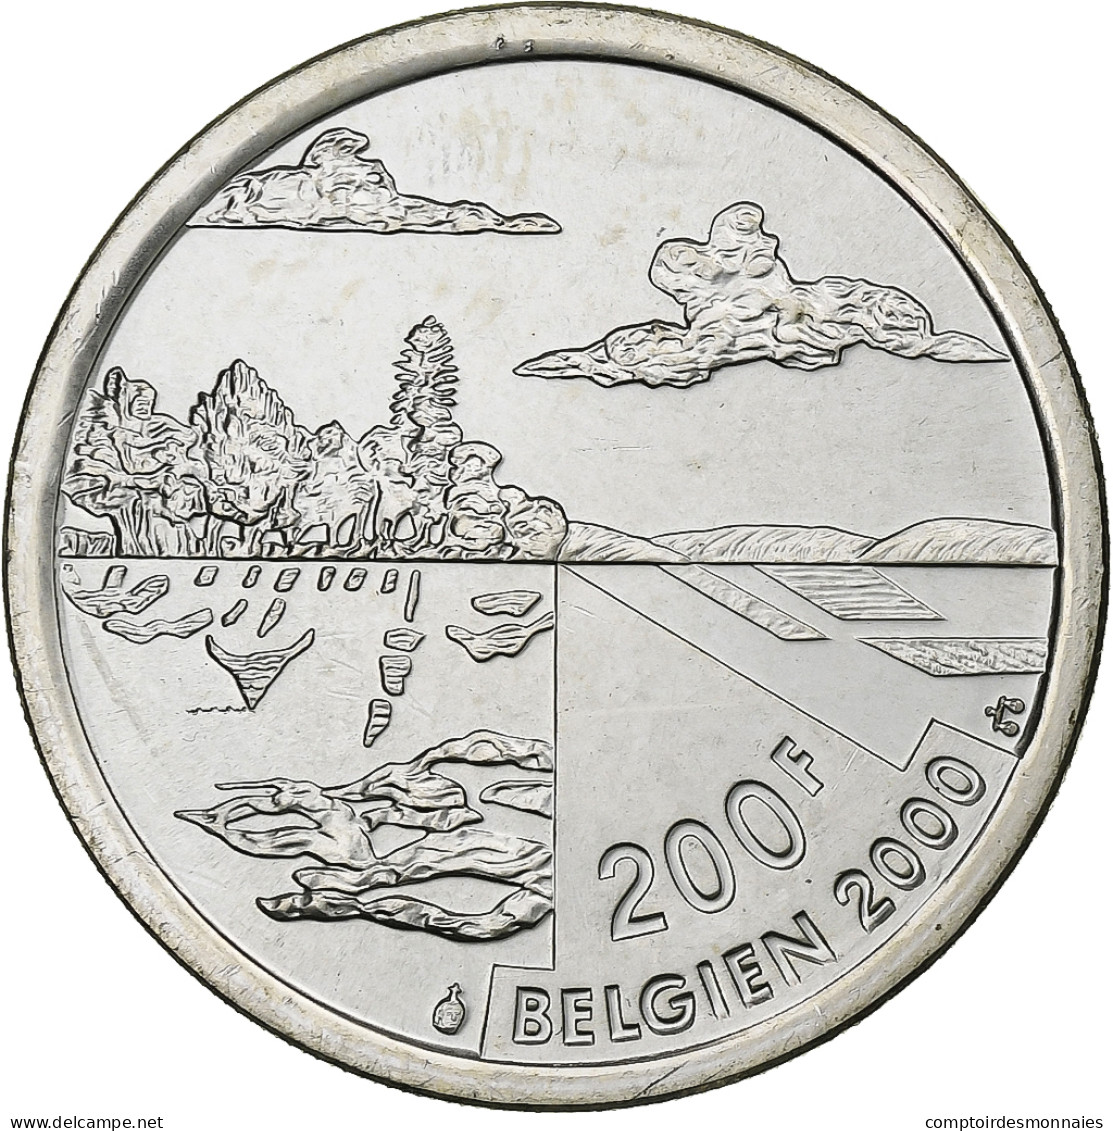 Belgique, Albert II, 200 Francs, 2000, Argent, SPL - 200 Frank